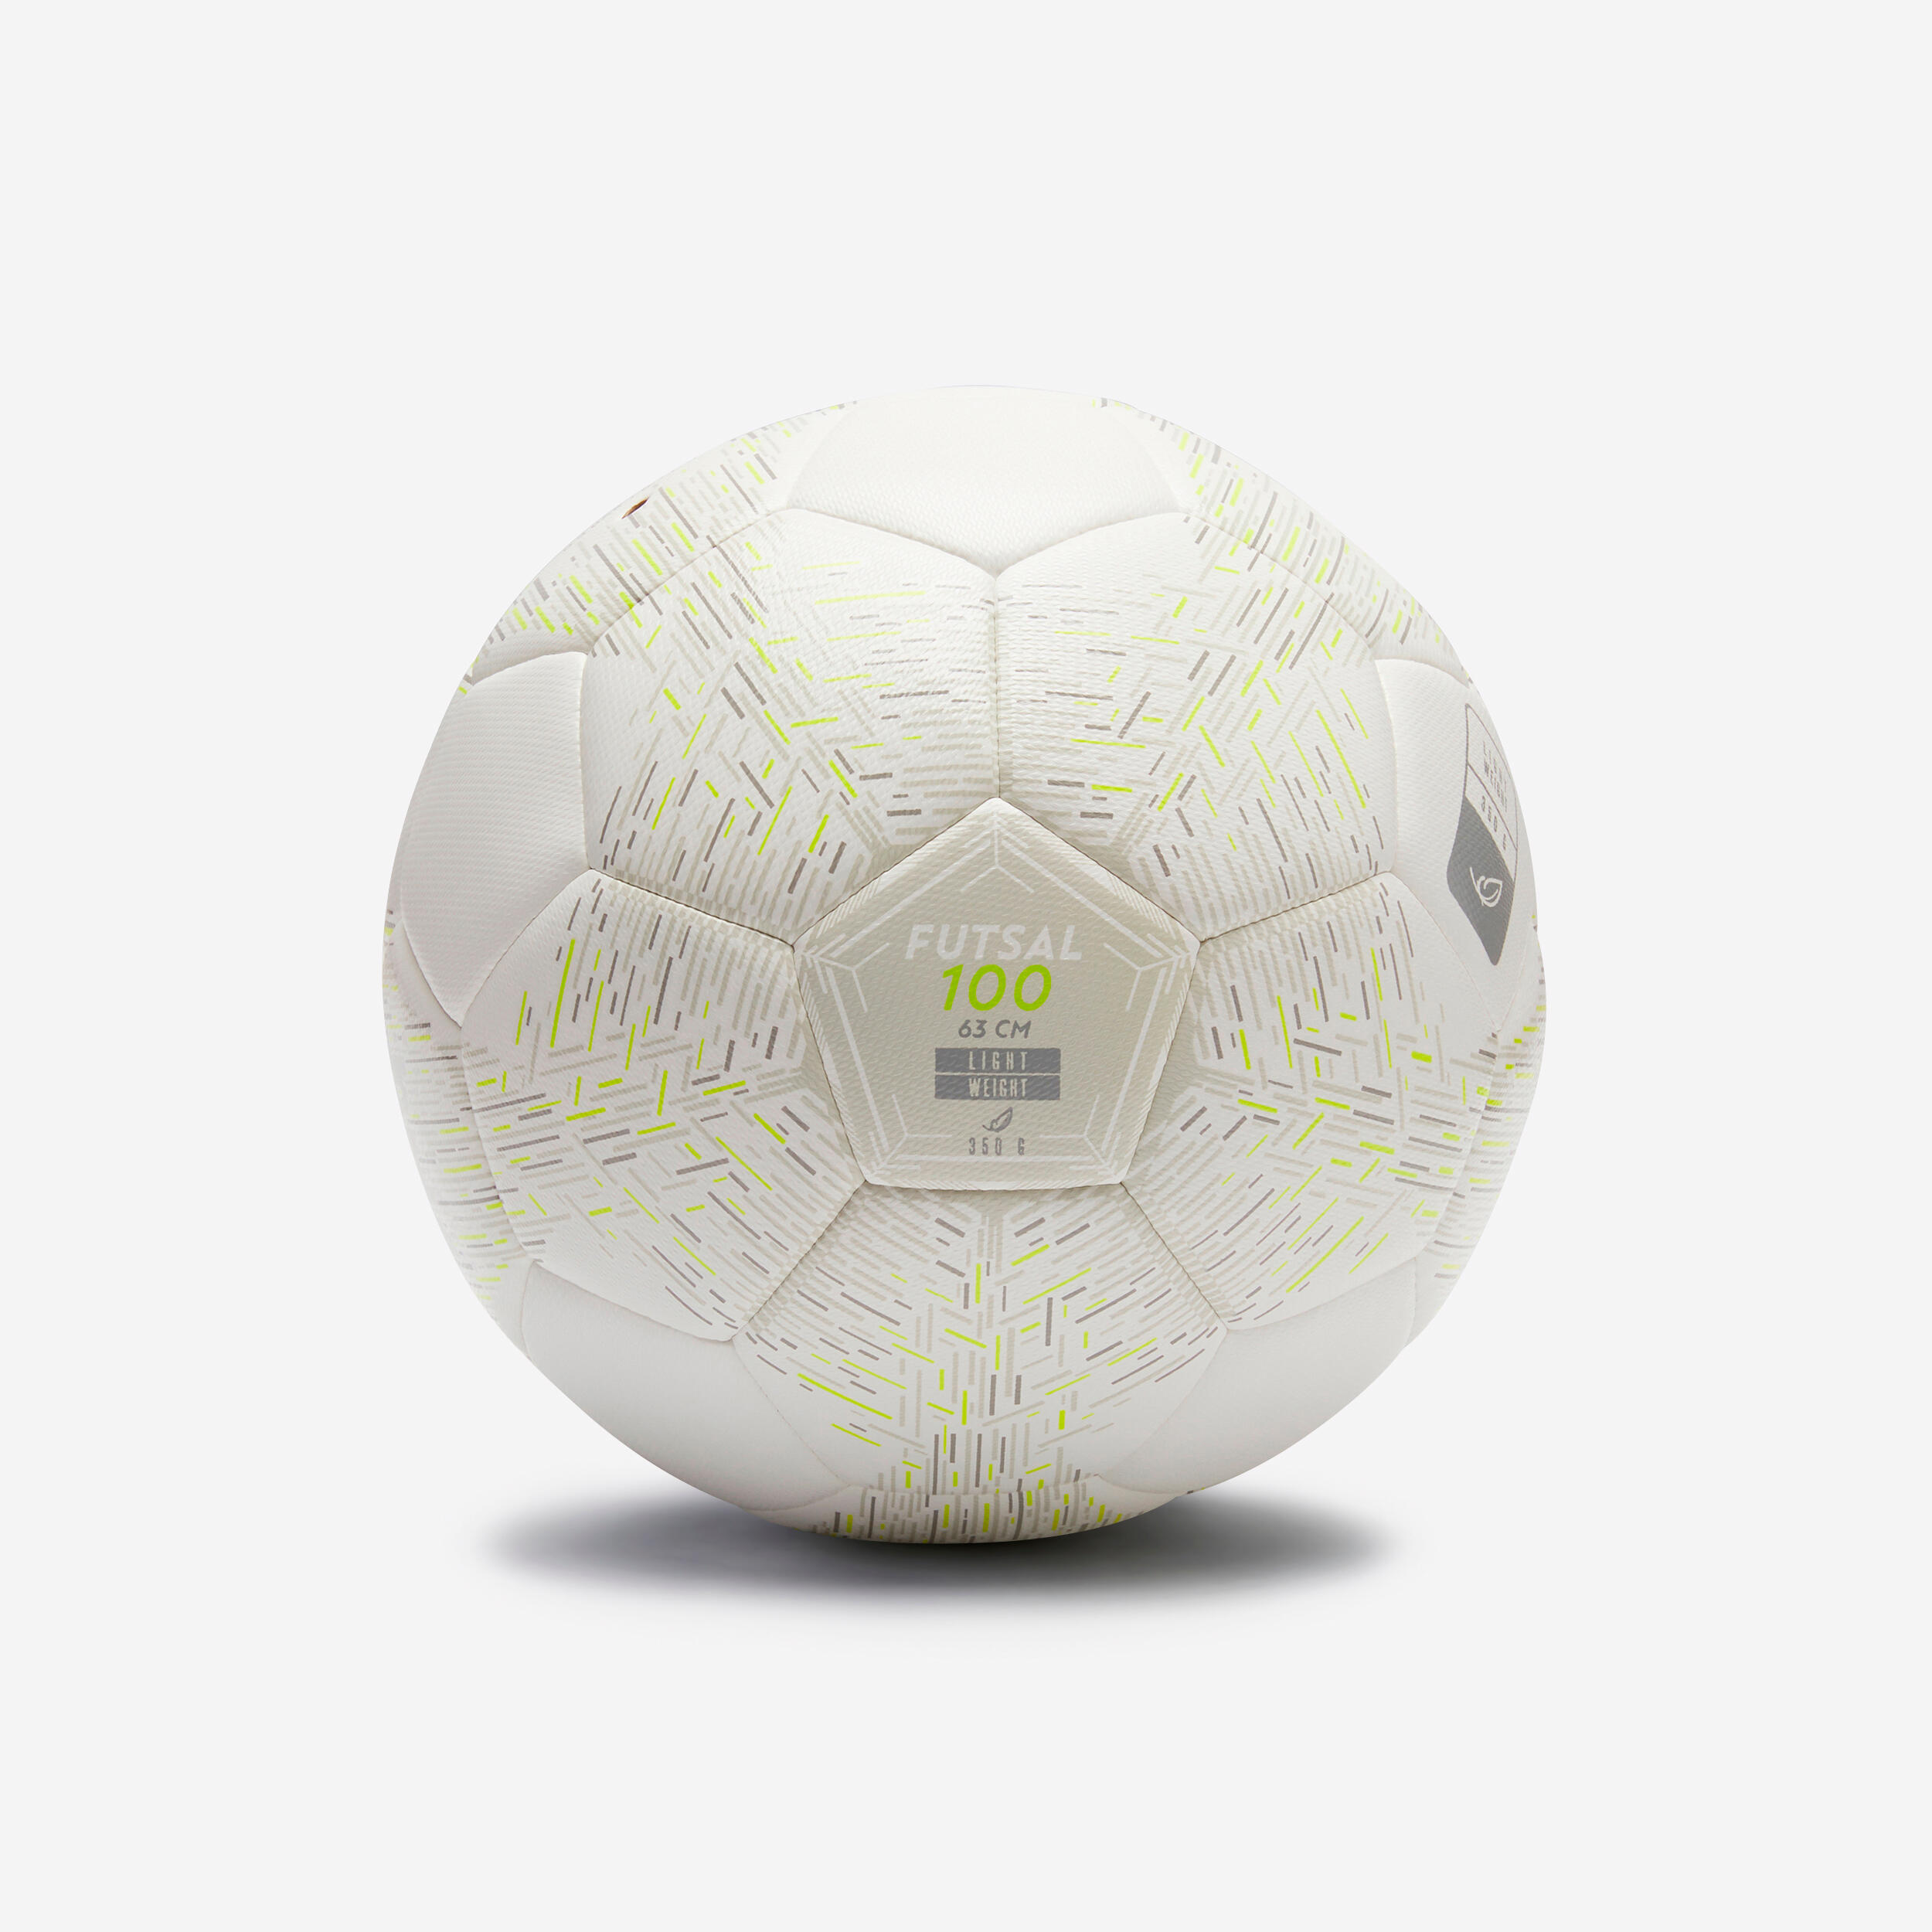 KIPSTA Ballon De Futsal 100 Light Blanc -